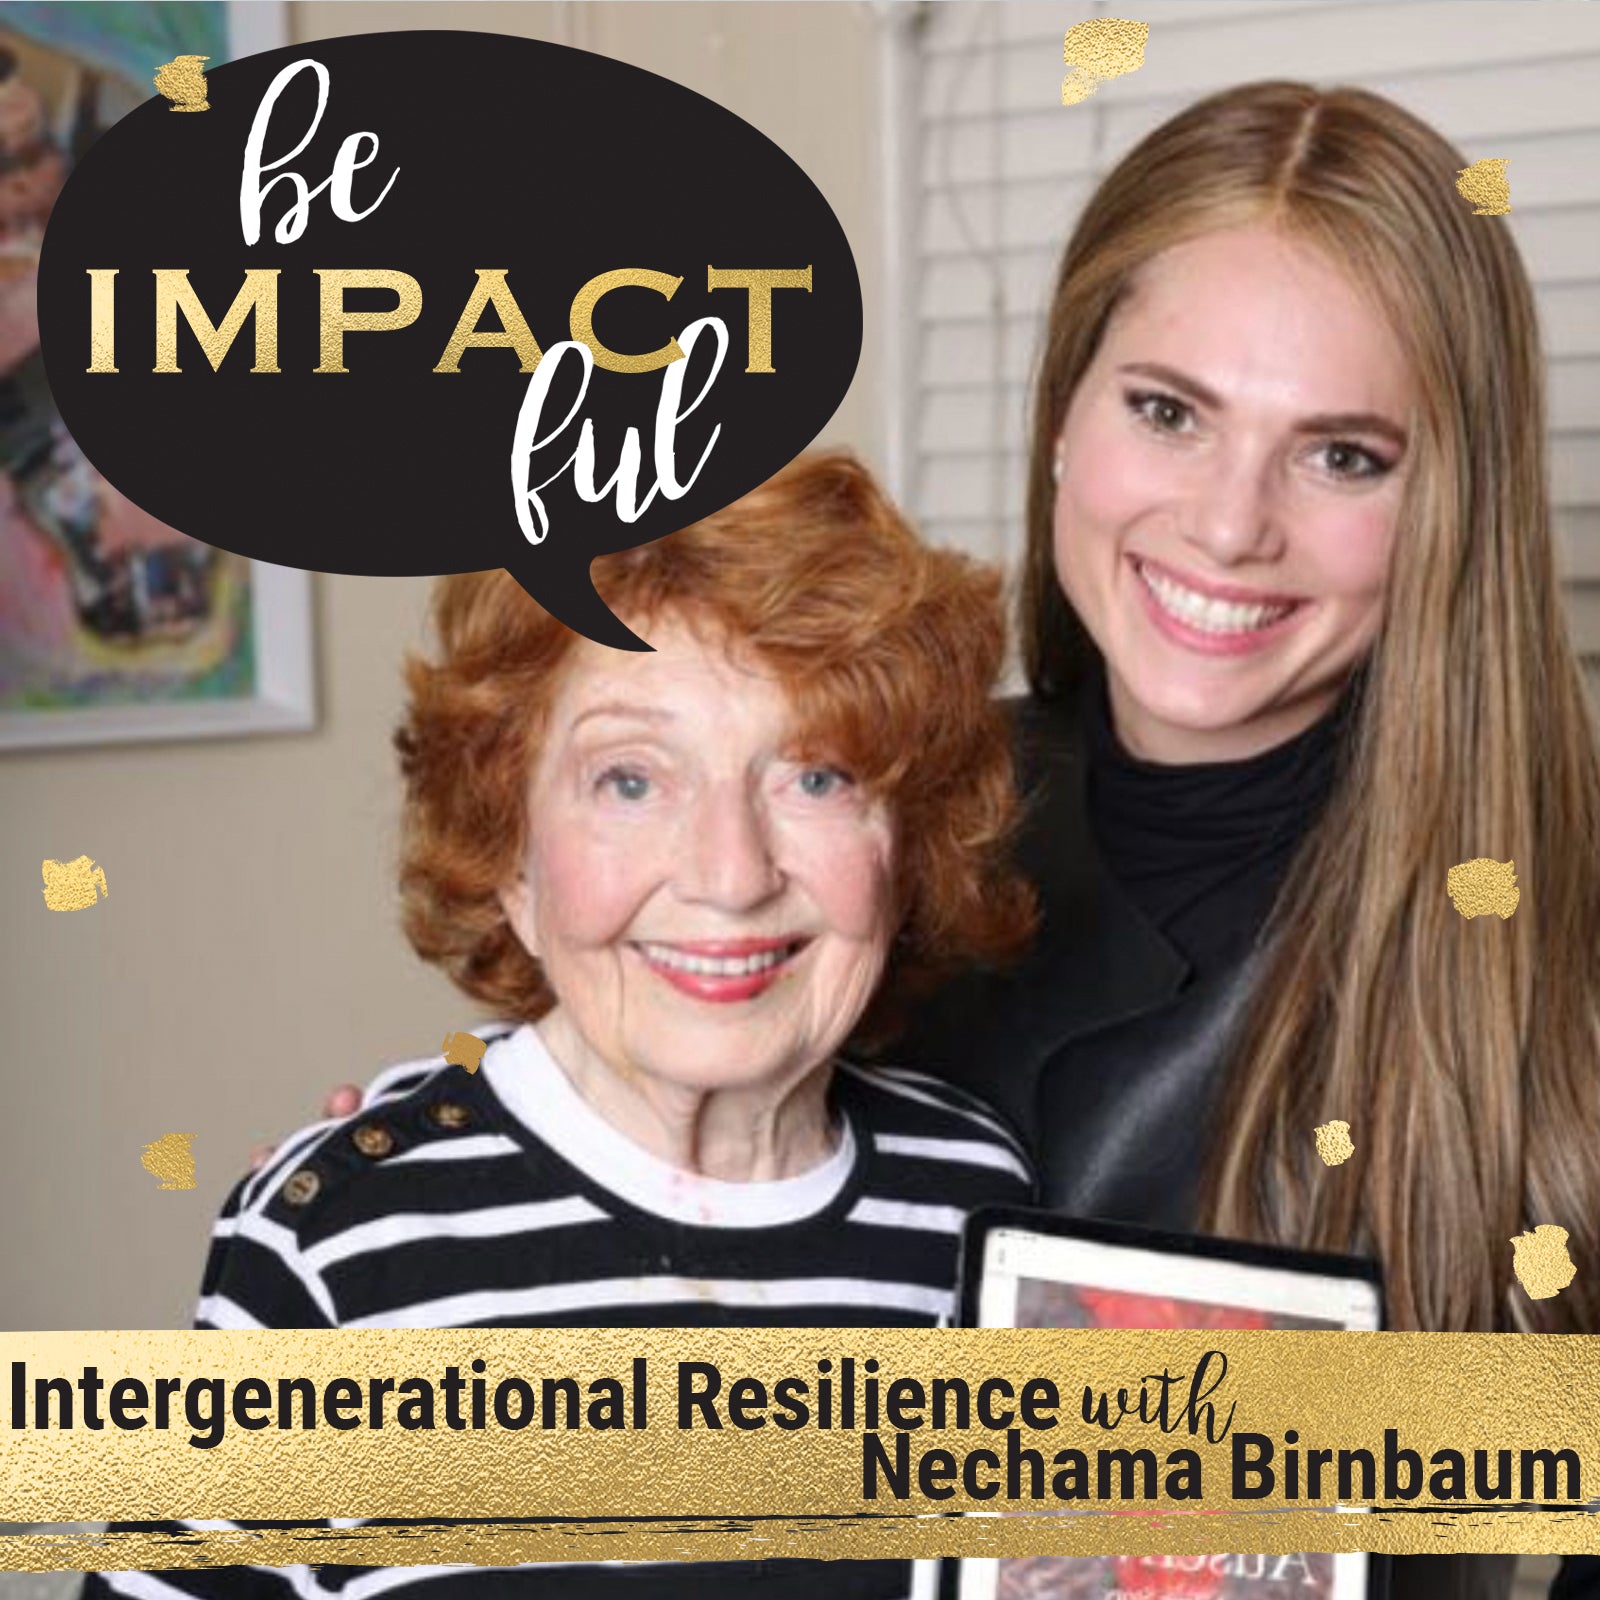 Intergenerational Resilience with Nechama Birnbaum